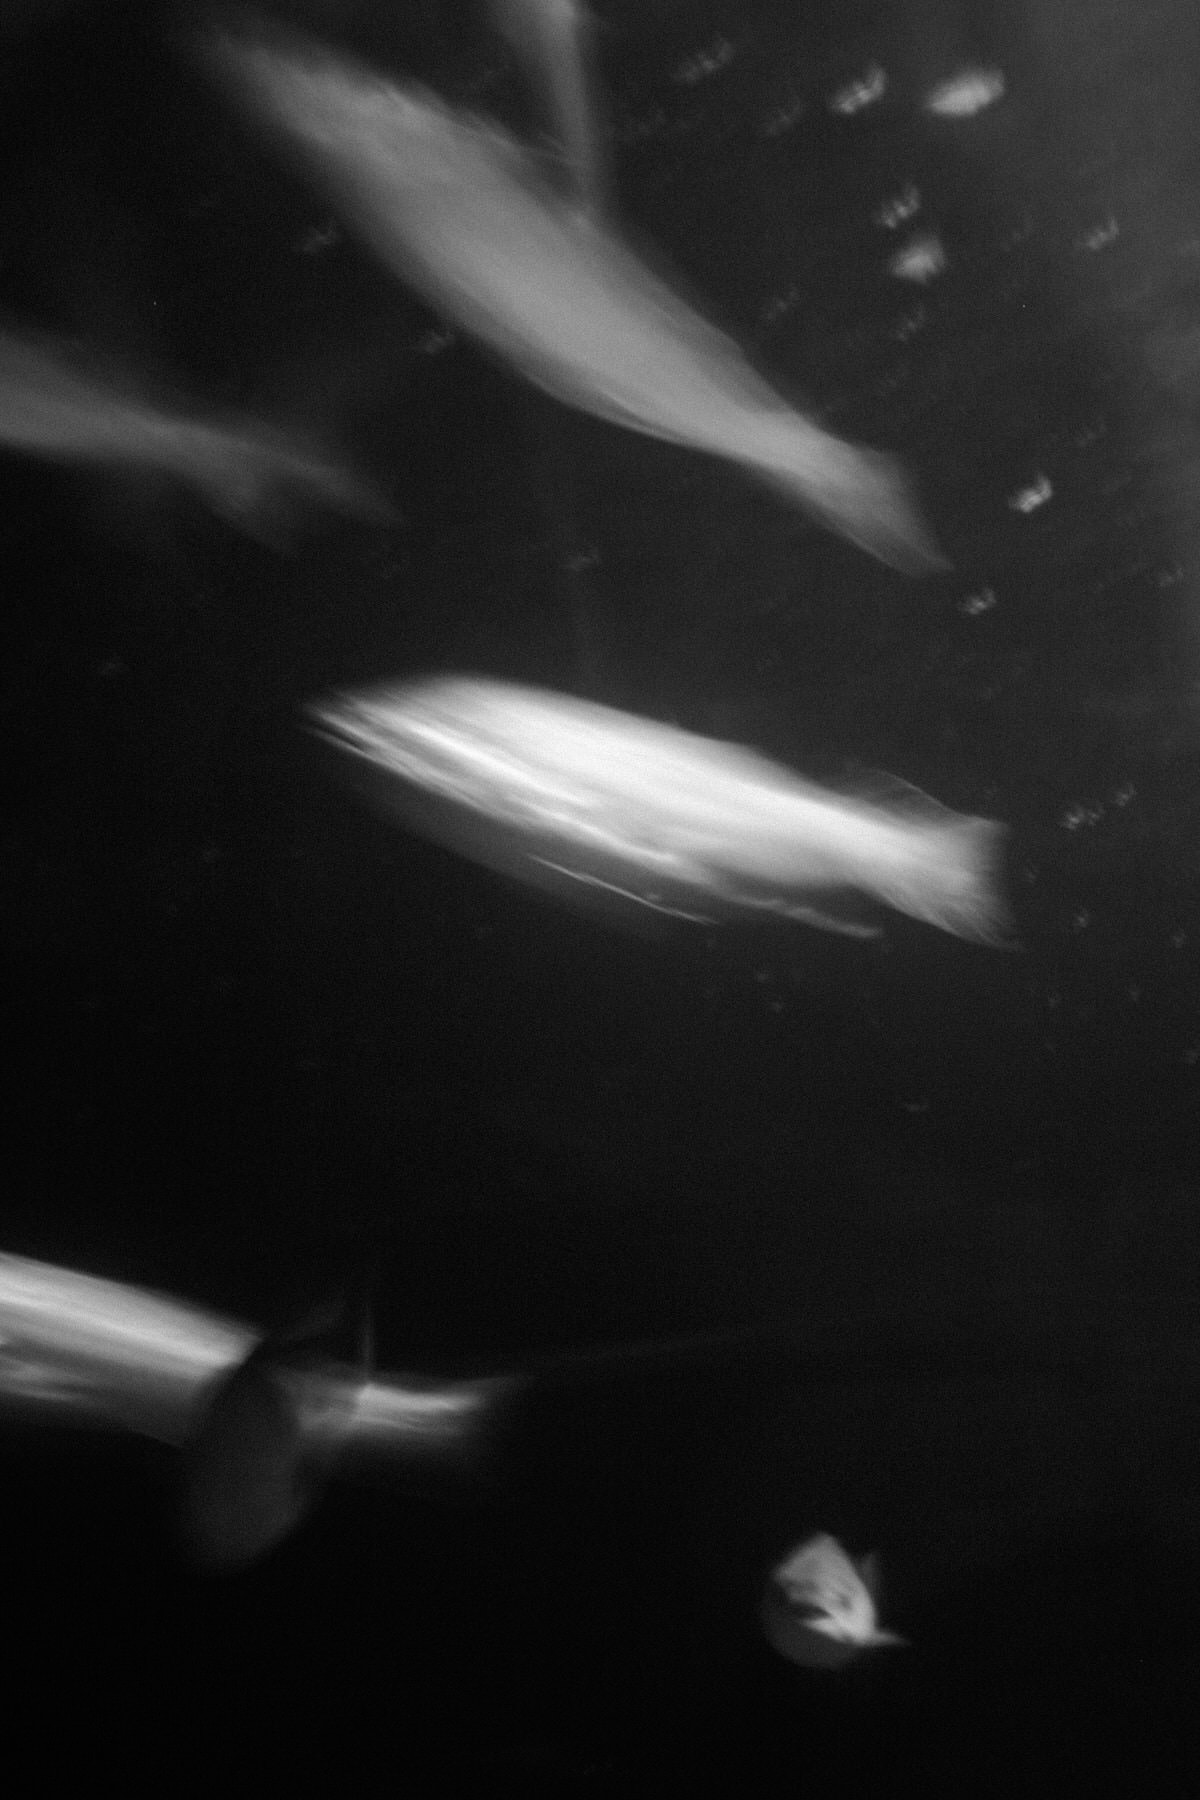 Monterey-Bay_Aquarium-Cannery-Row-Monterey-California-black-and-white-fine-art-photography-by-Studio-L-photographer-Laura-Schneider-_3392